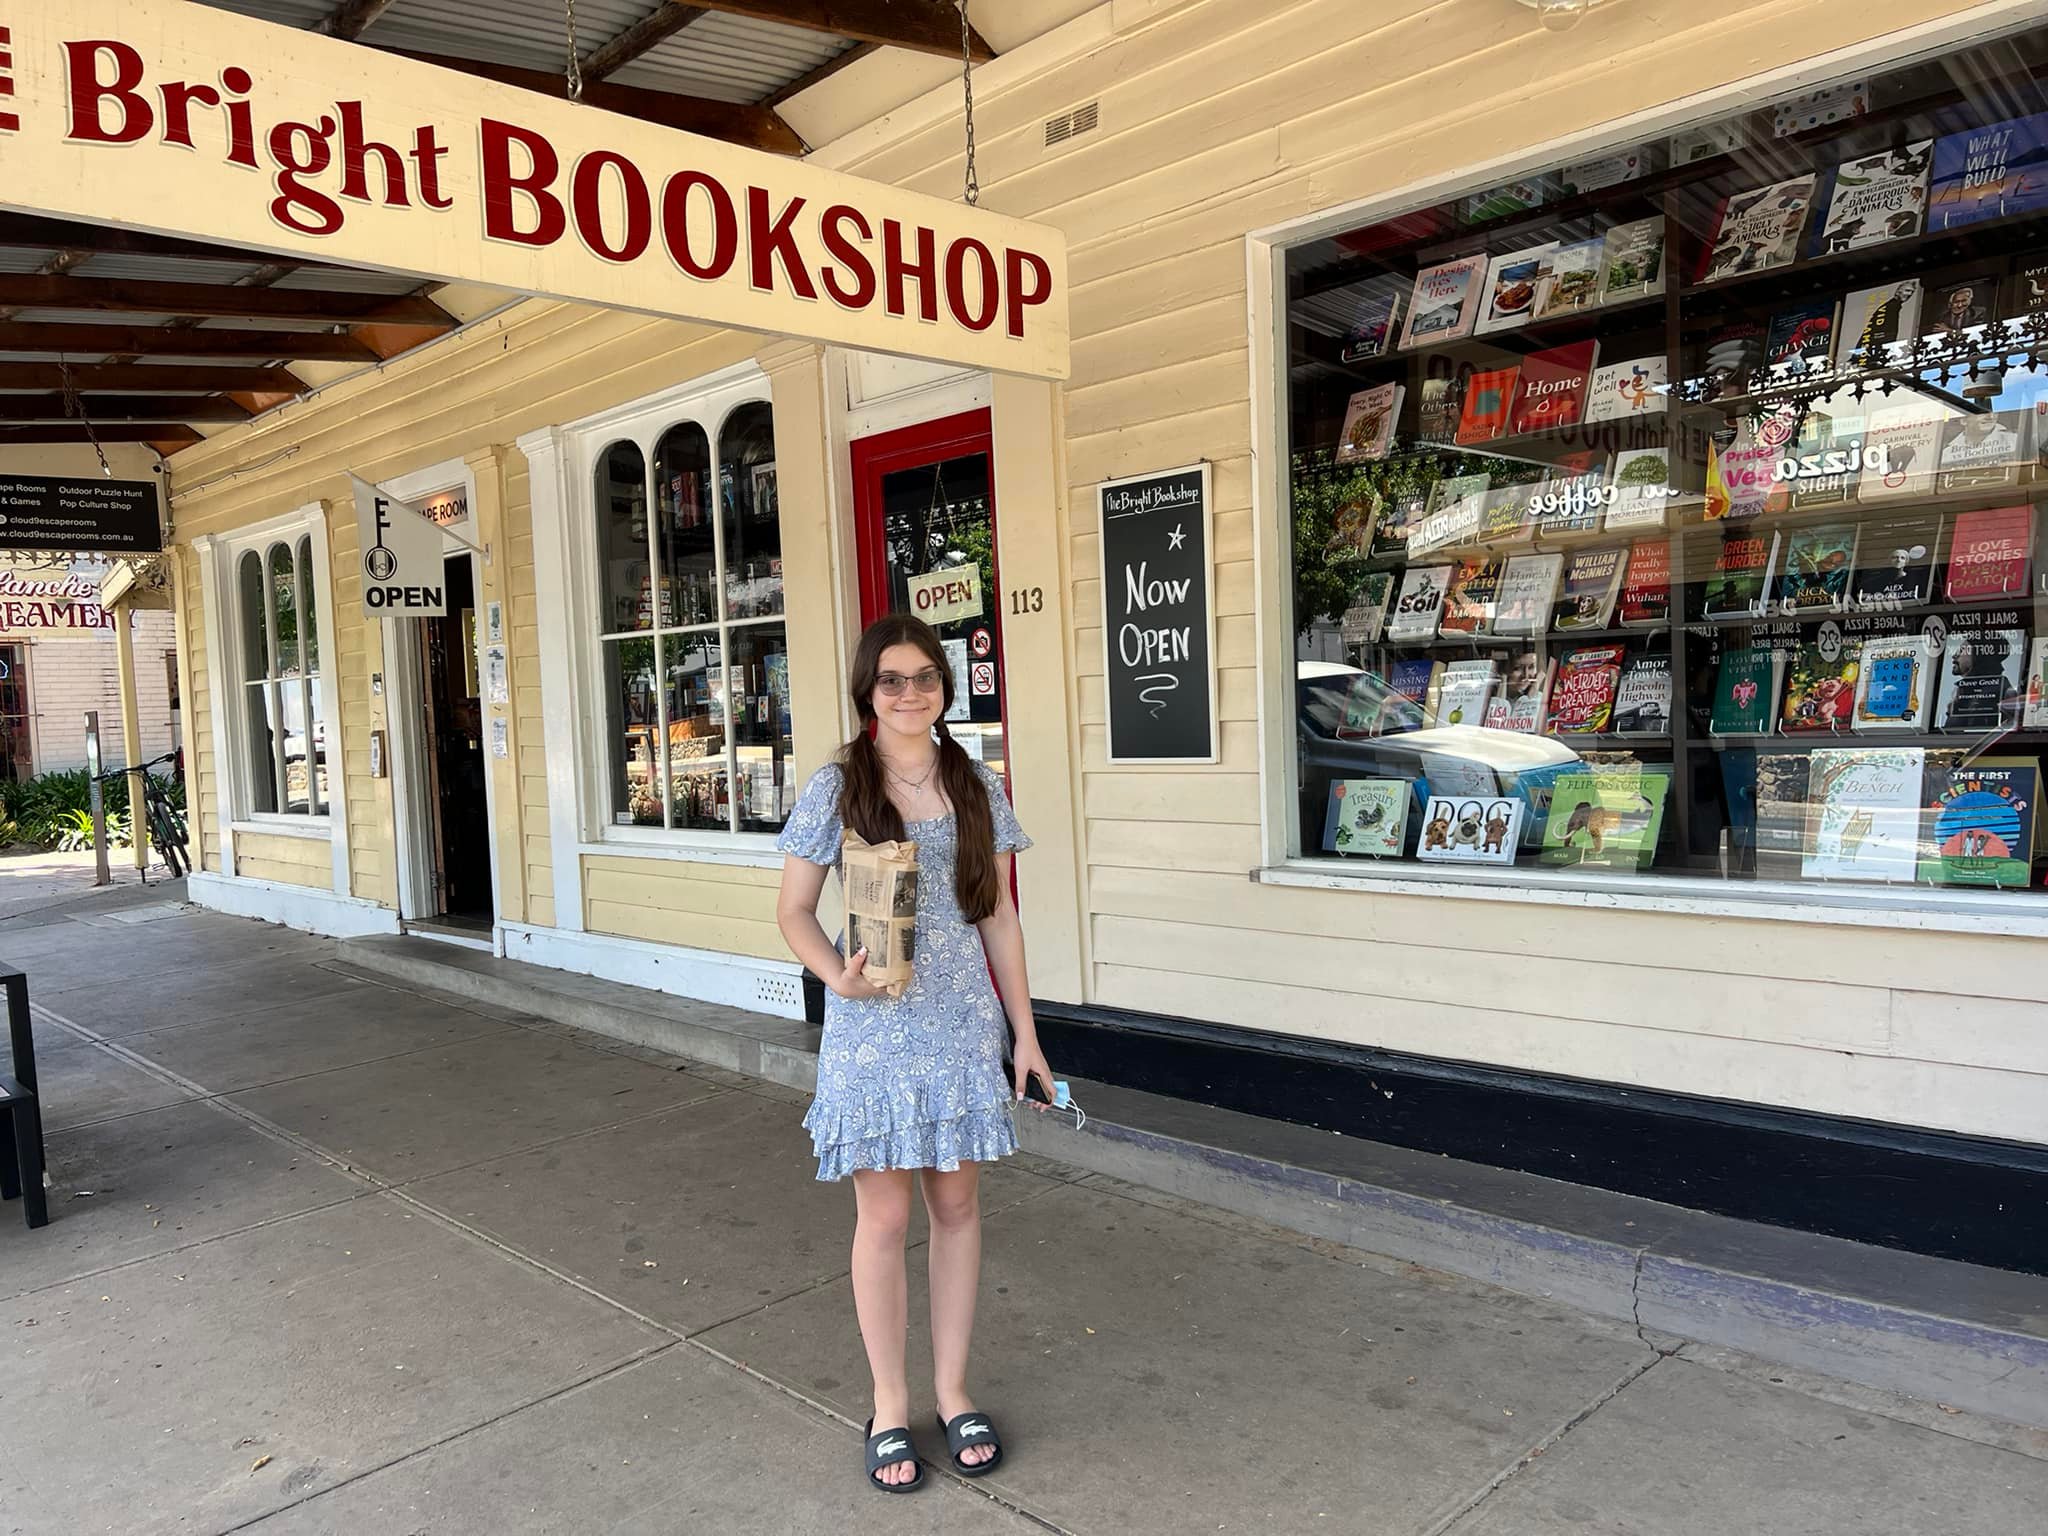 Bright Bookshop